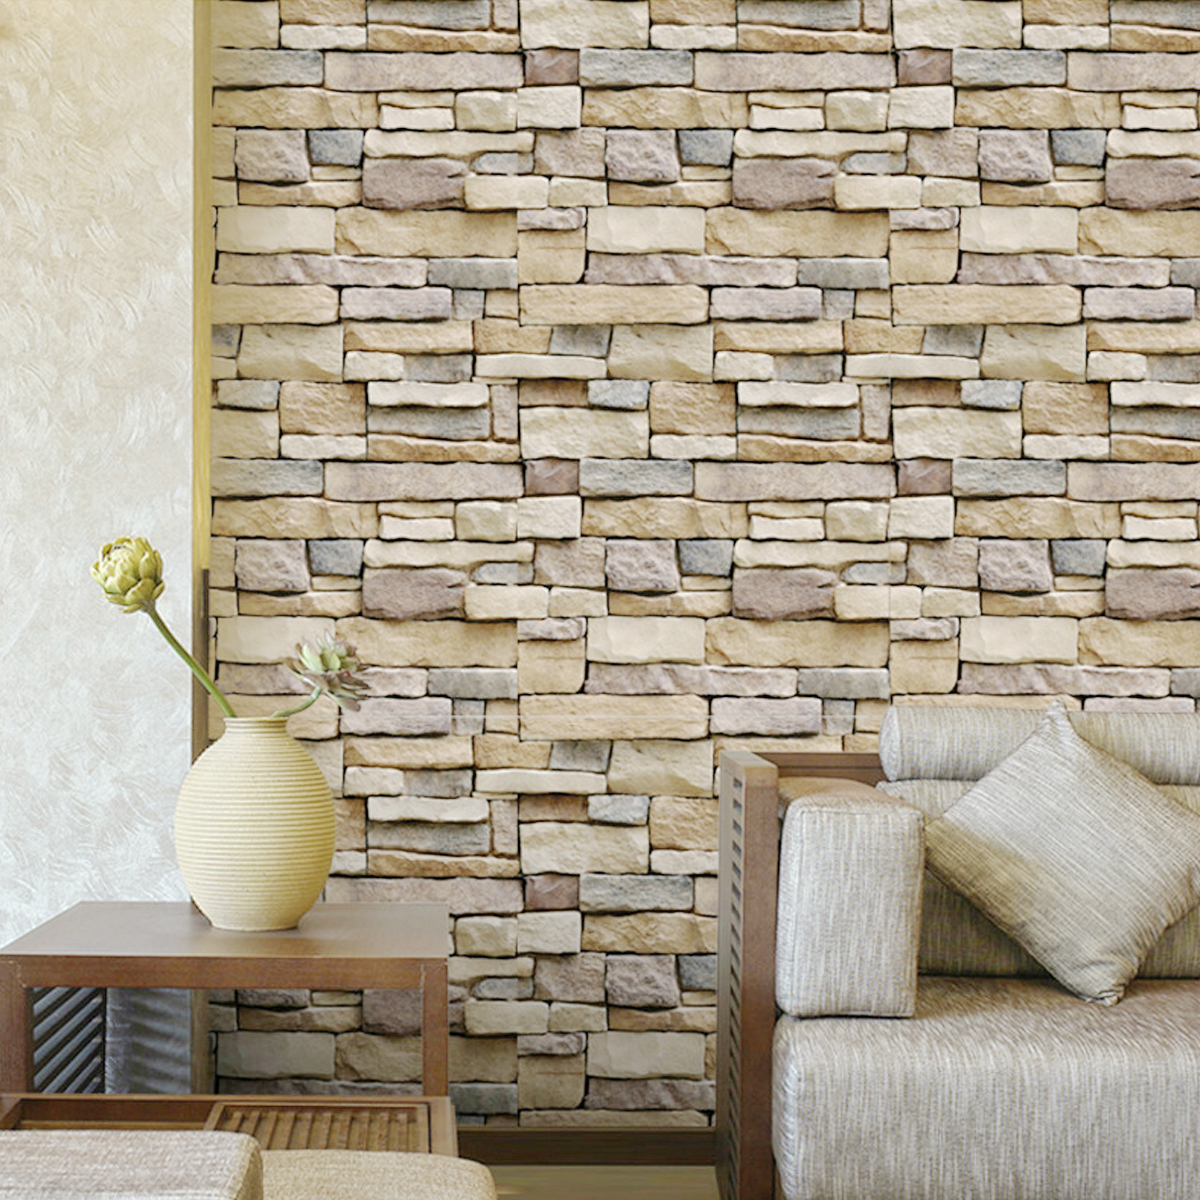 3D-Wall-Paper-Brick-Stone-Pattern-Sticker-Rolls-Self-adhesive-Backdrop-DIY-Room-Decor-1373594-4